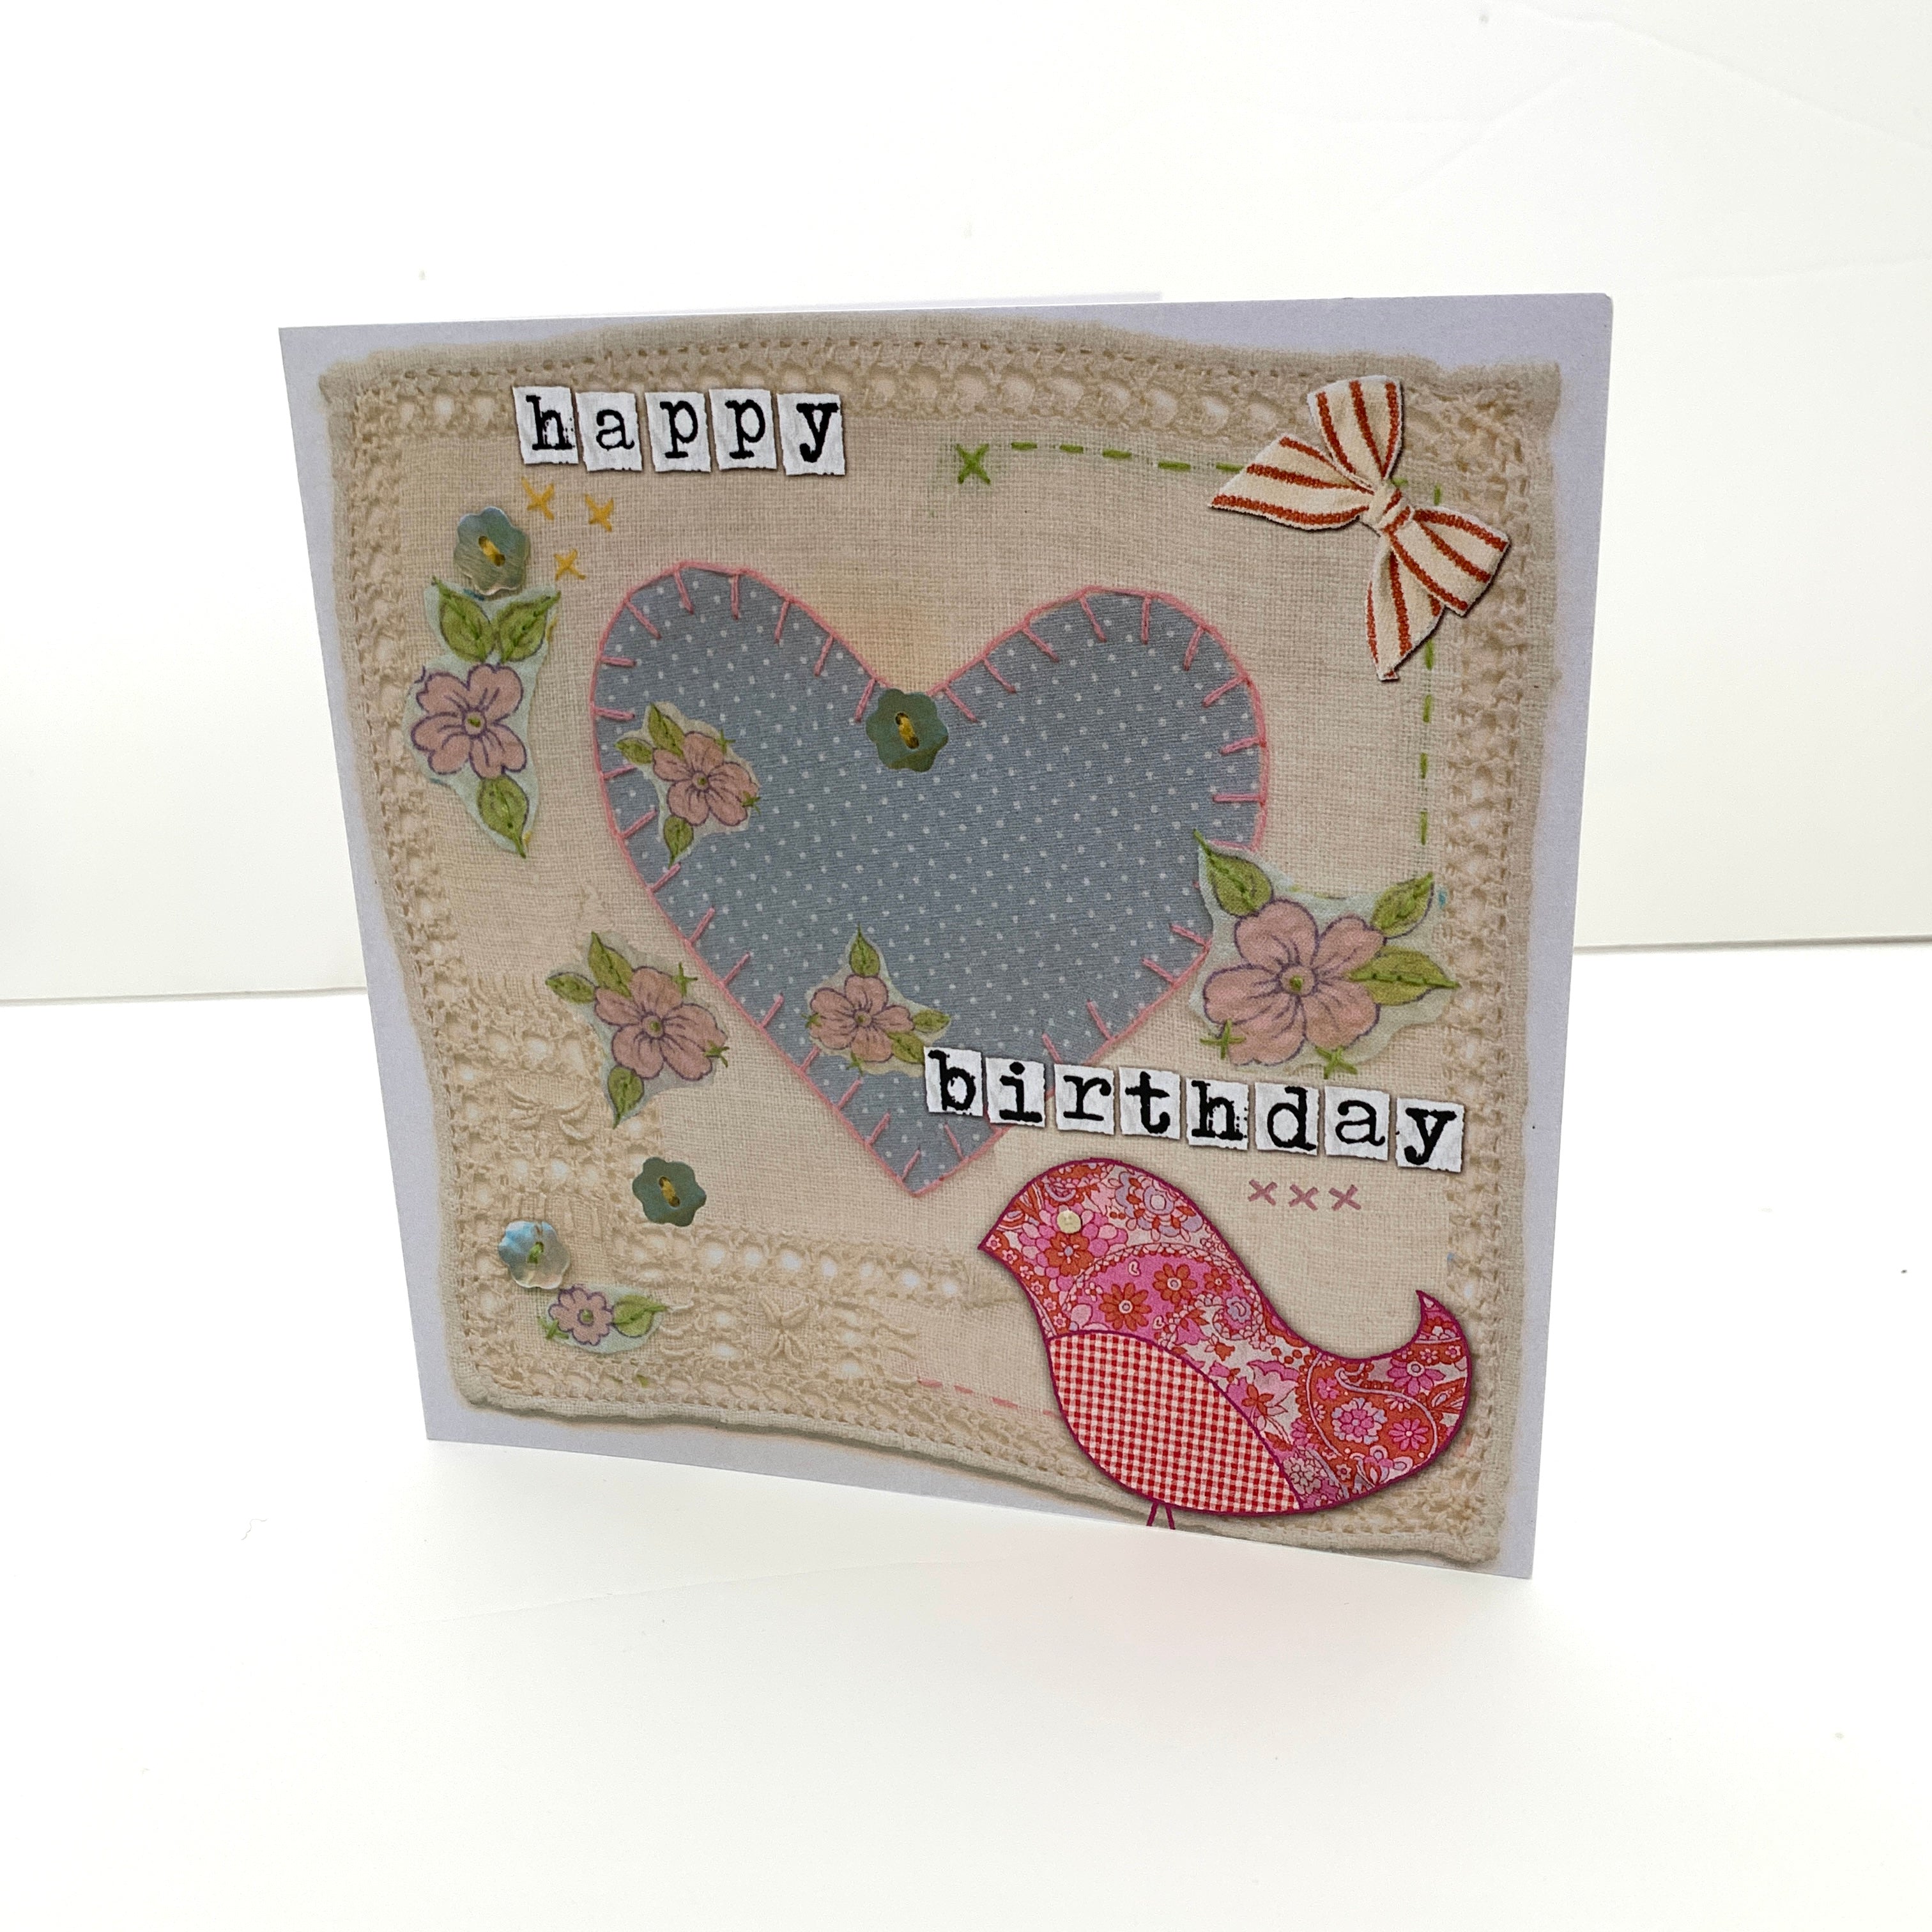 Happy birthday heart and bird greeting card